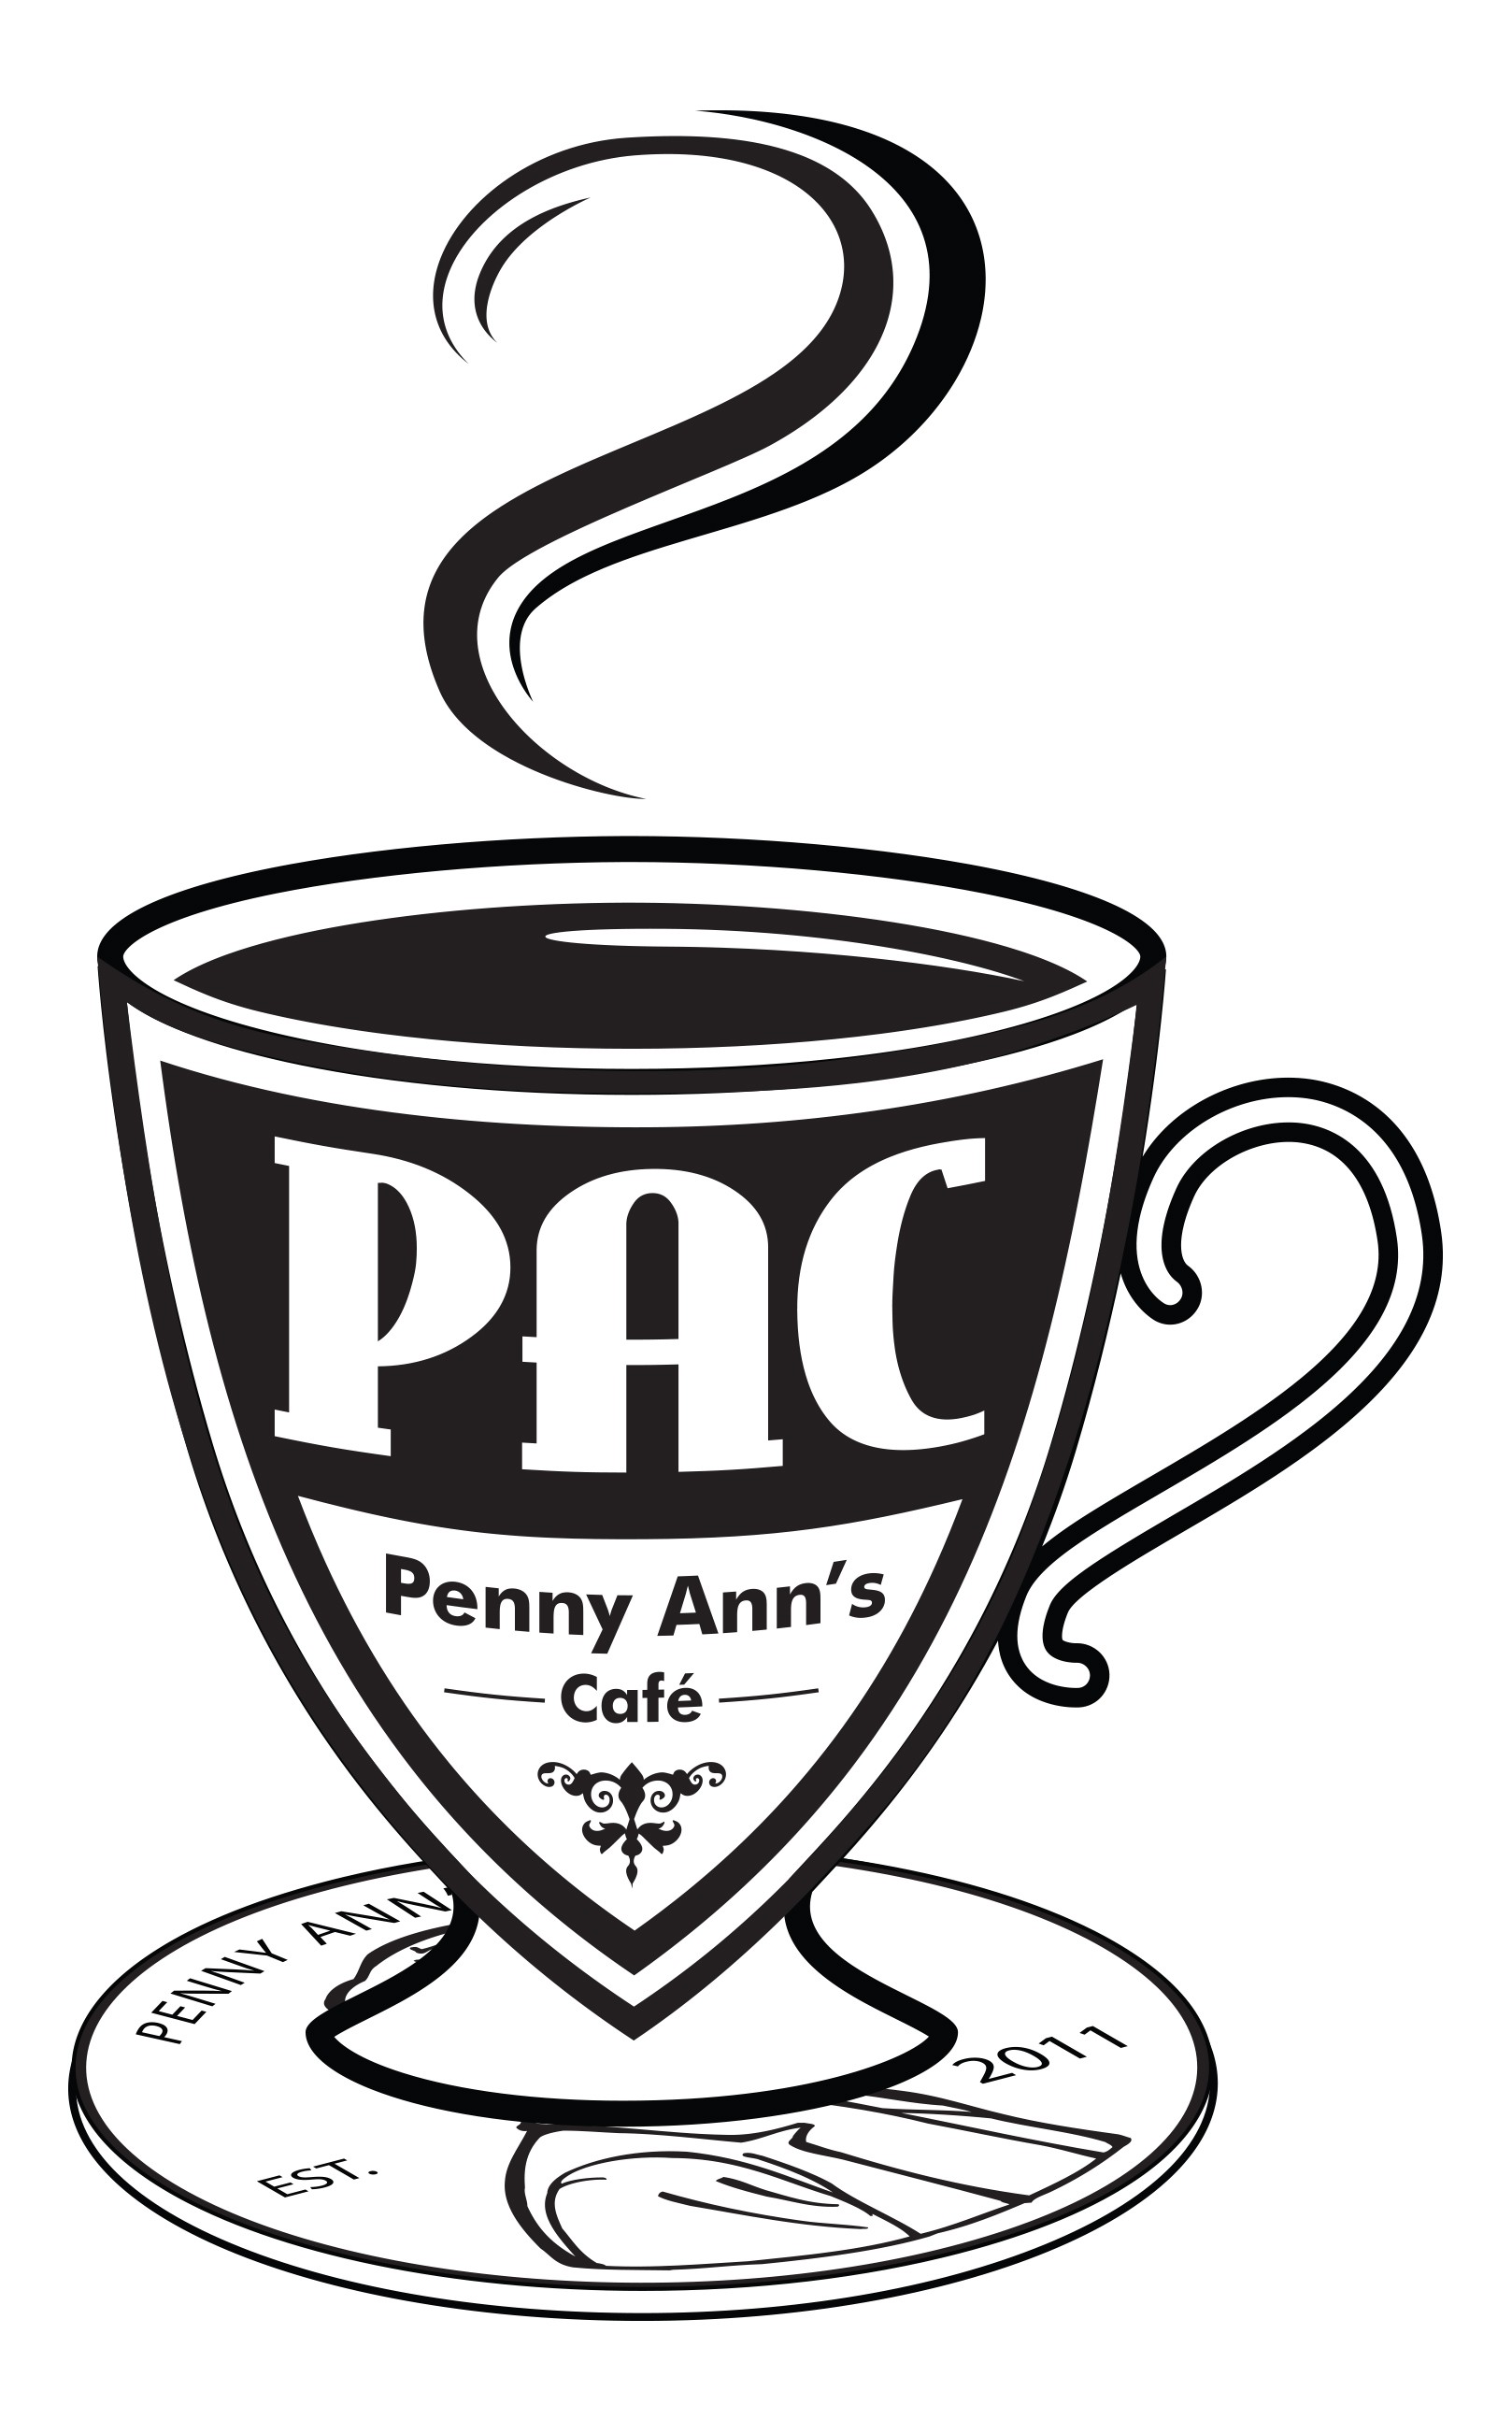 Penny Ann's Cafe Bountiful